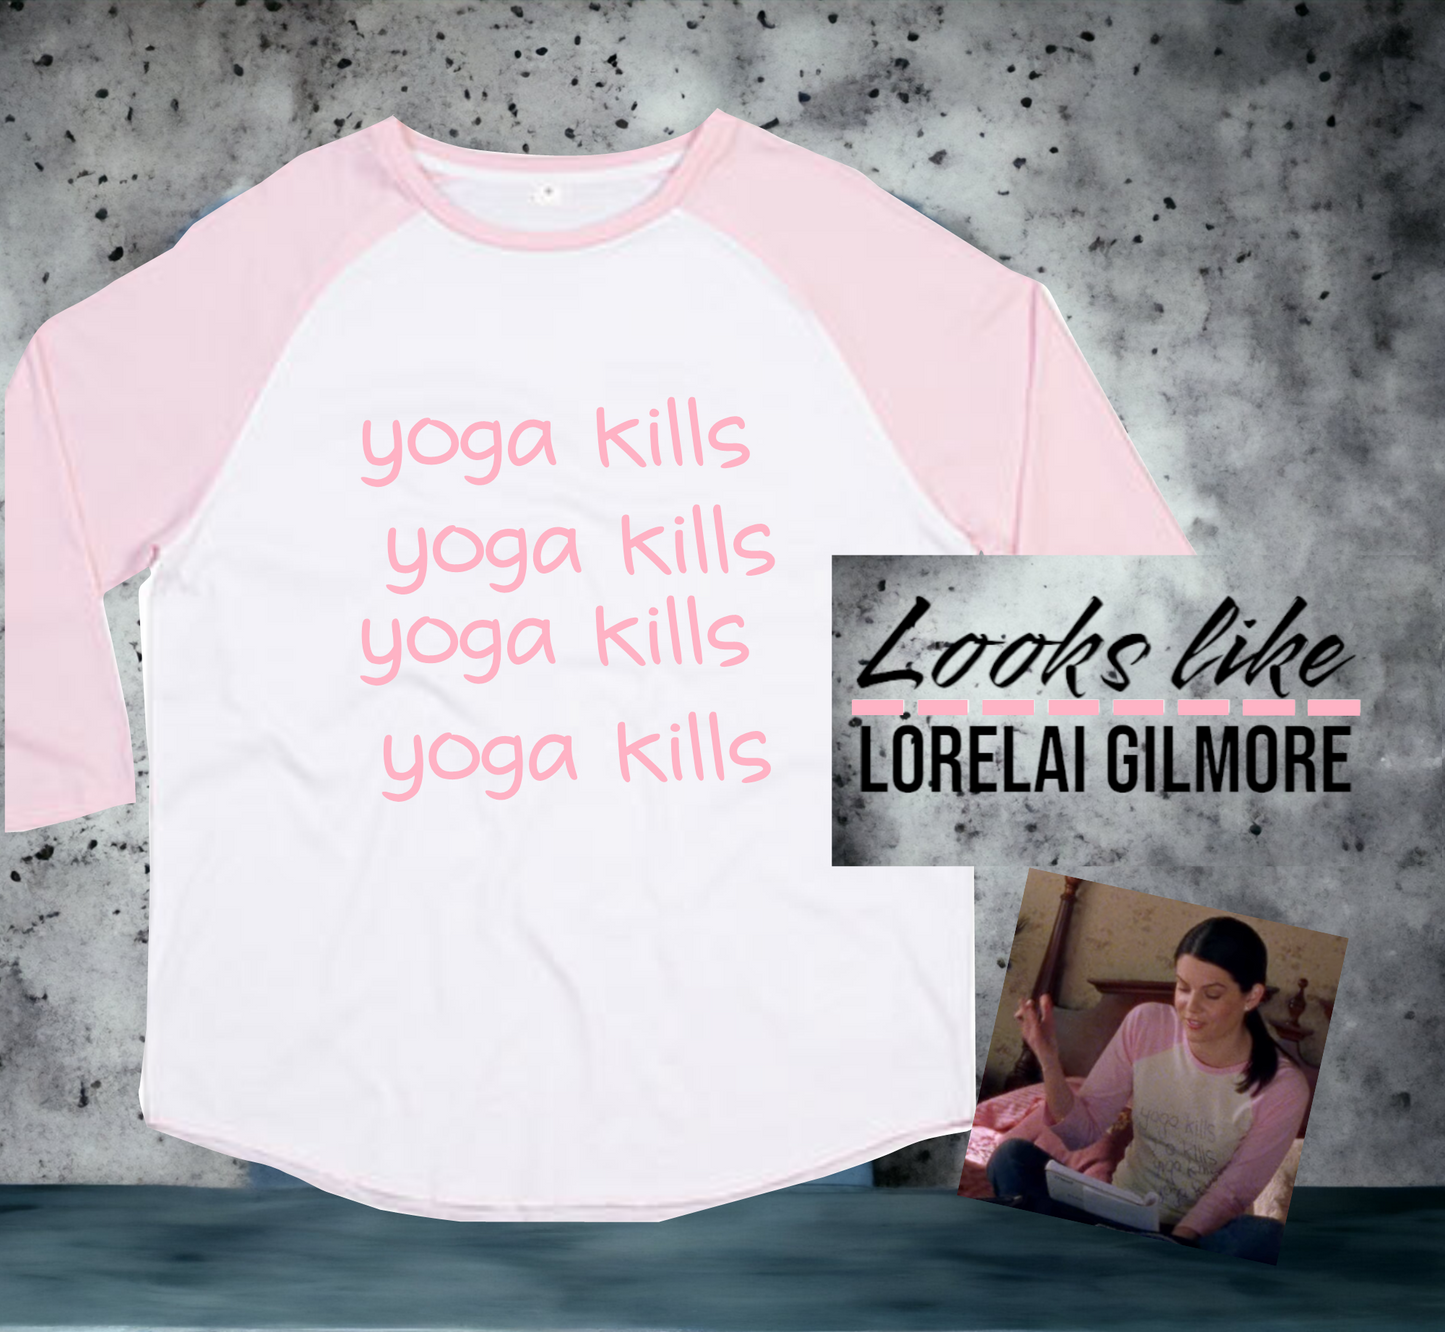 Bowling Roller Rink Shirt in Lorelai Gilmore Style